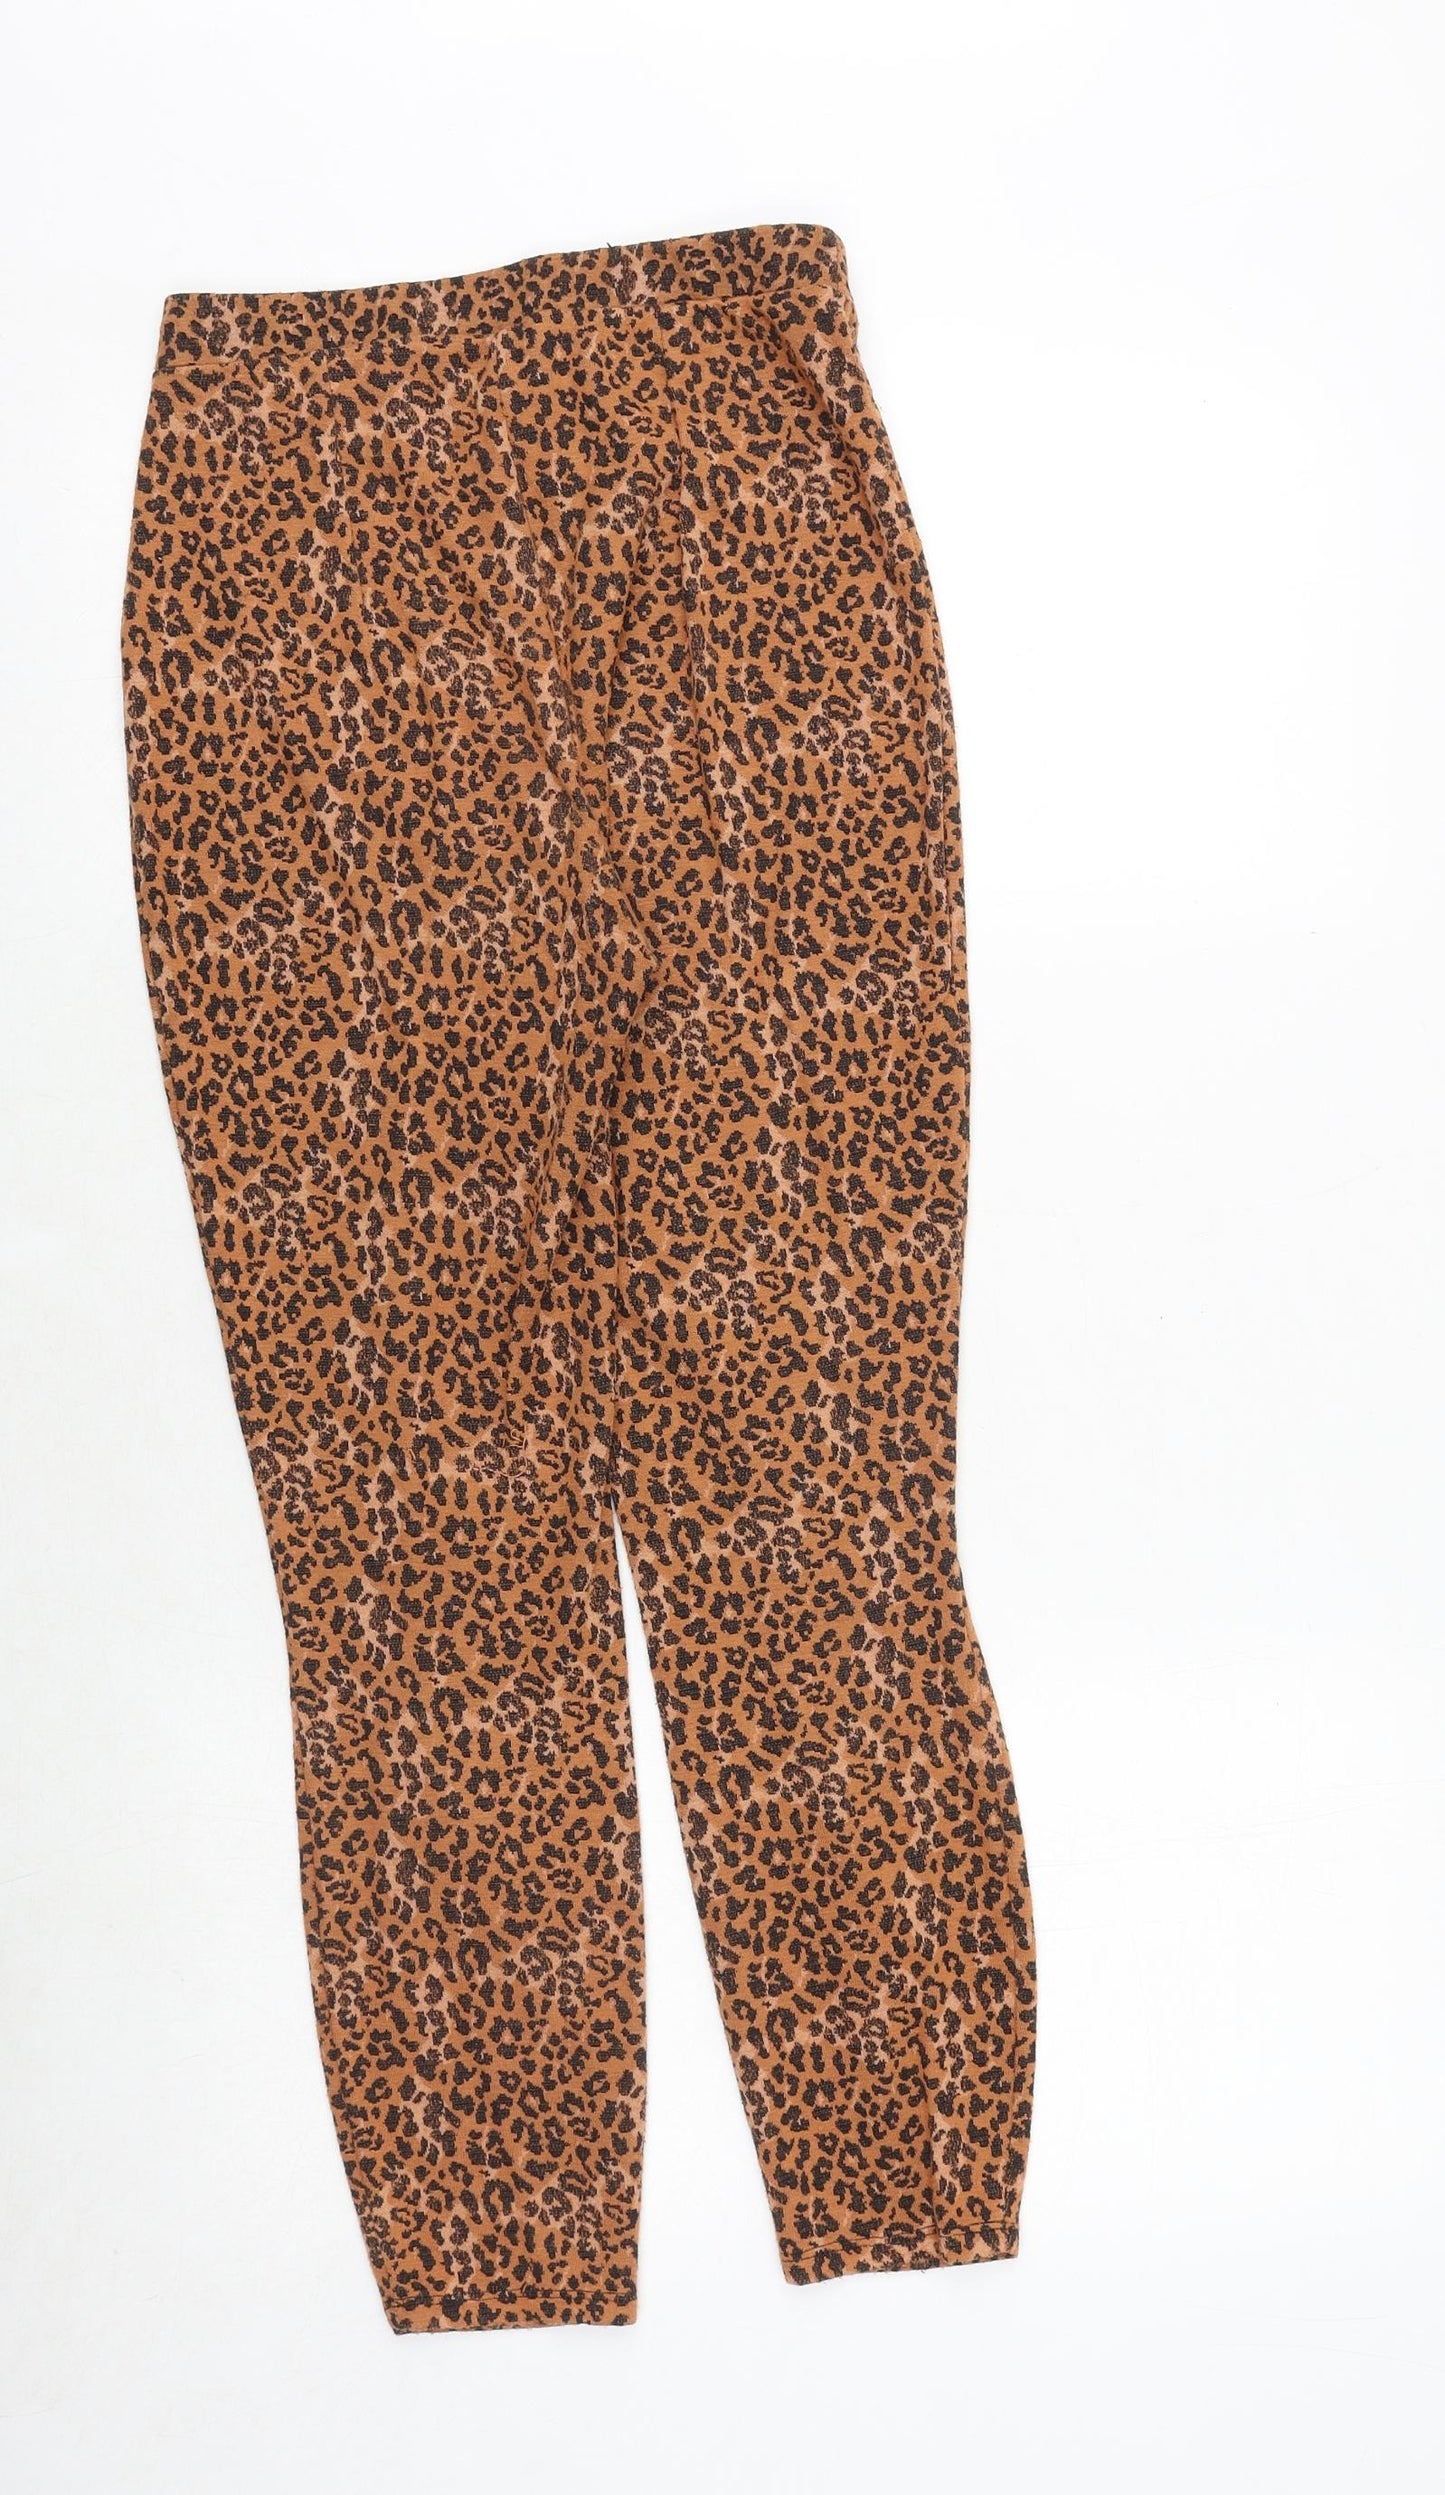 ASOS Womens Orange Animal Print Polyester Trousers Size 10 Regular - Leopard Print